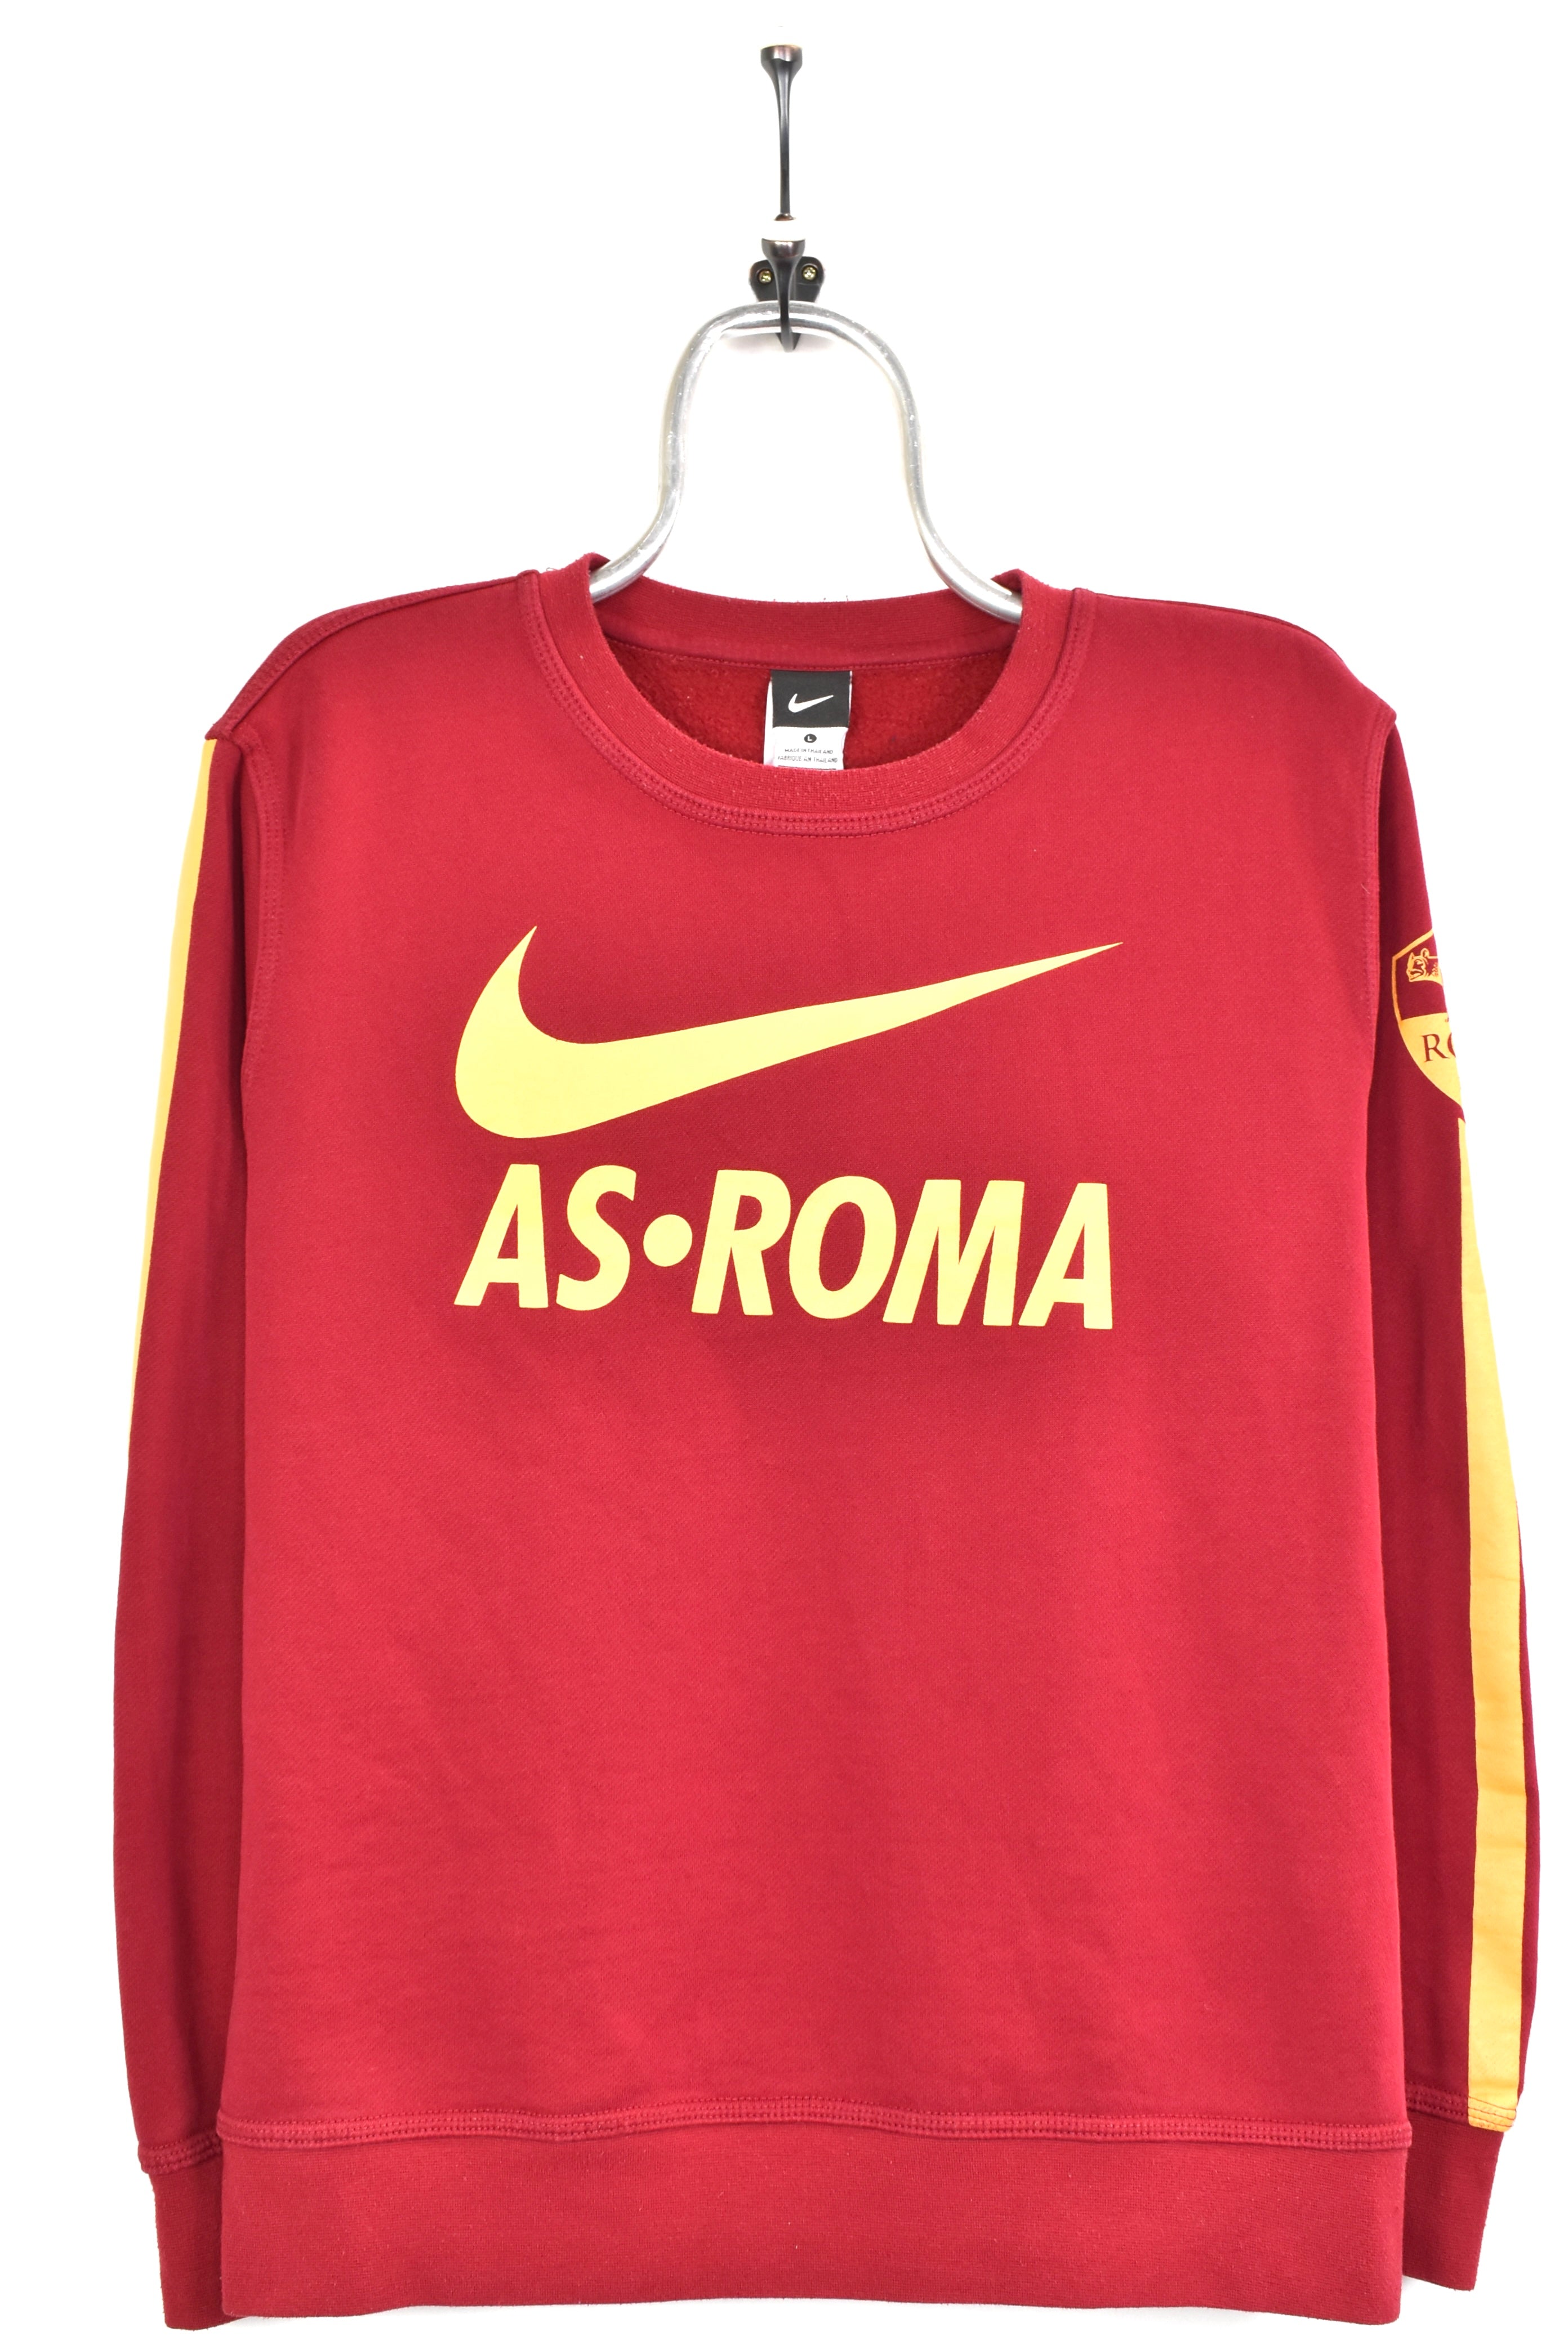 Vintage Nike sweatshirt, AS ROMA soccer graphic sweatshirt - medium, red NIKE